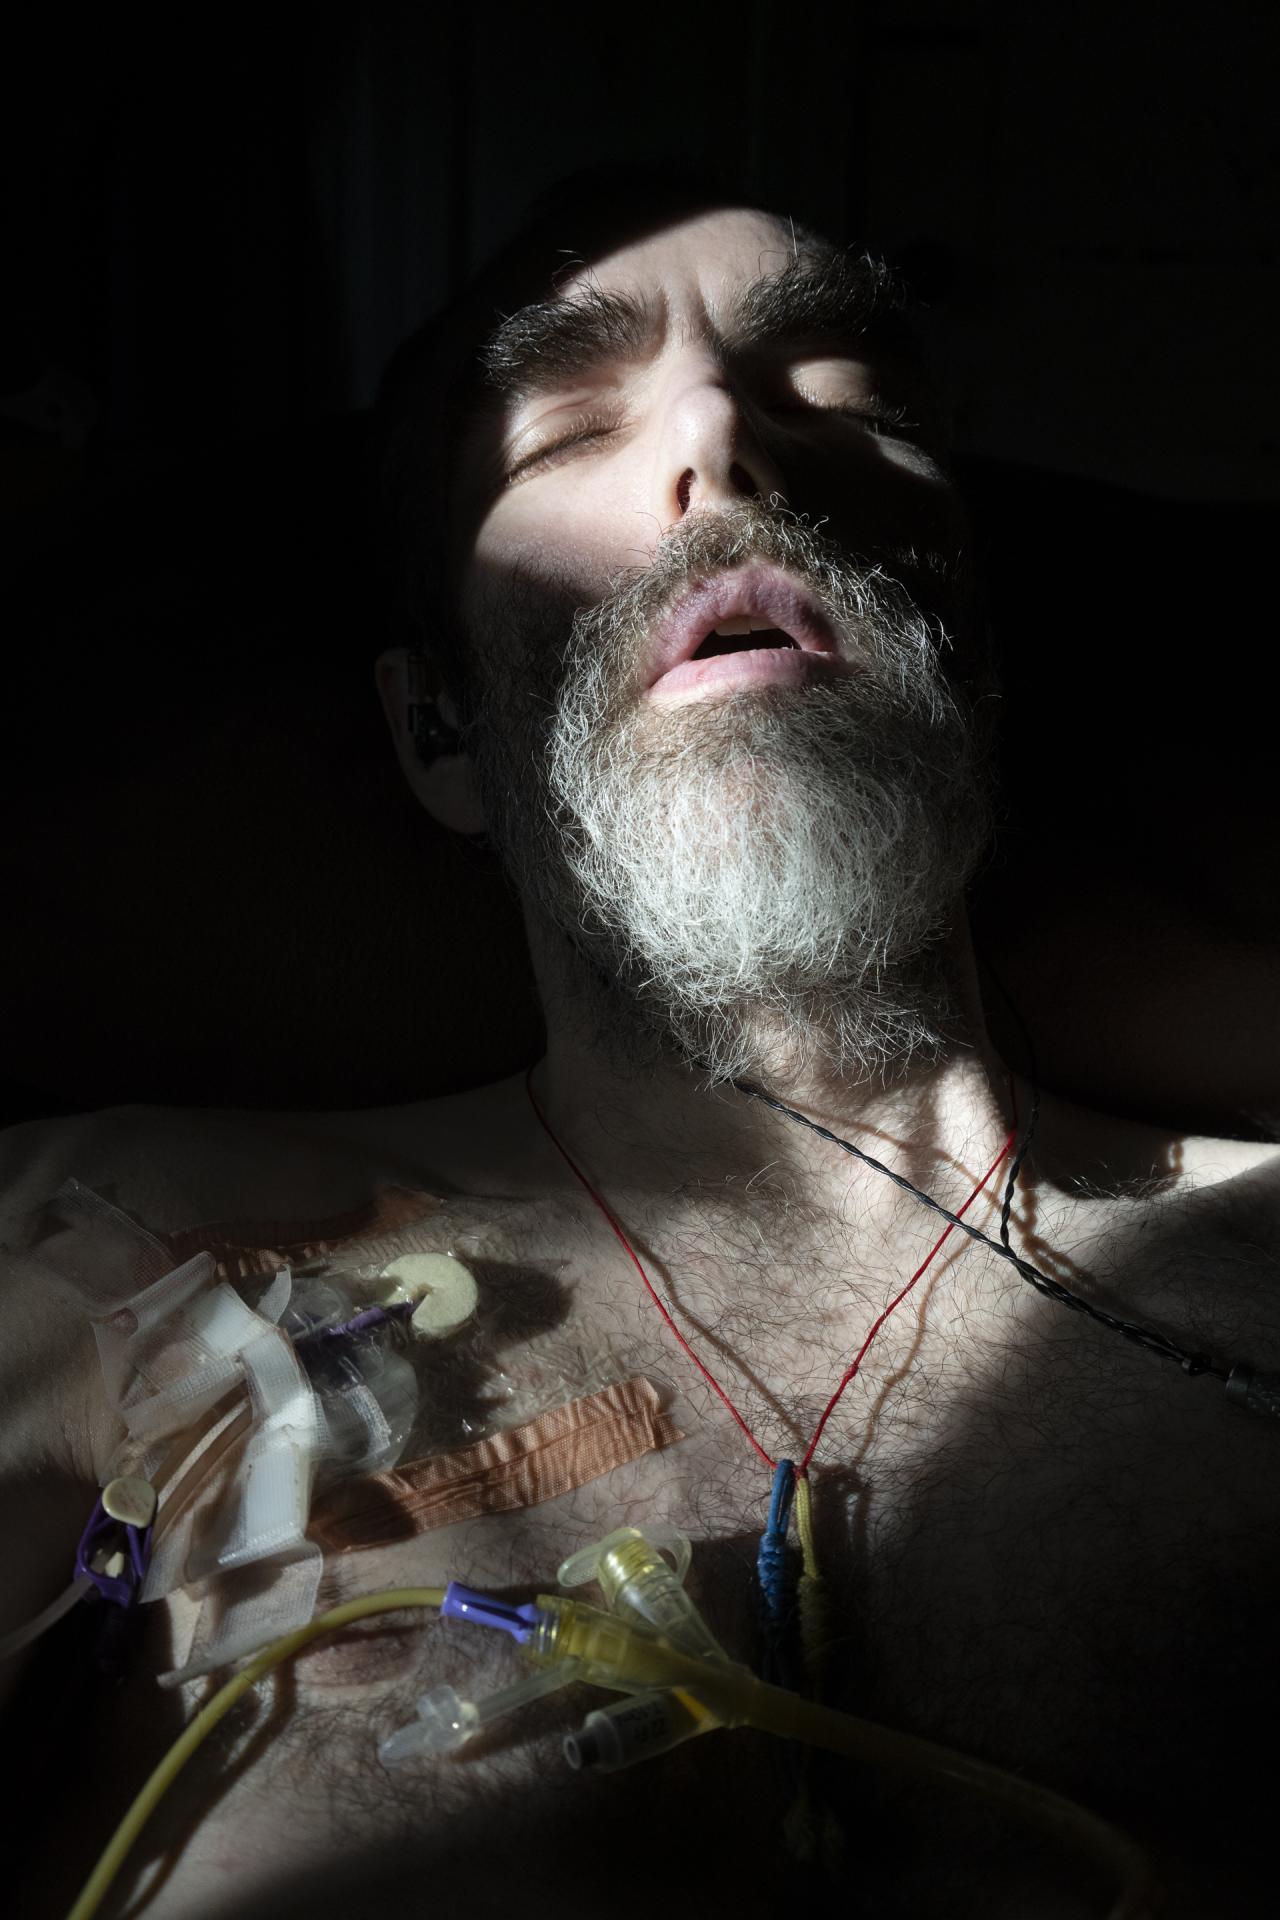 New York Photography Awards Winner - The Living Death